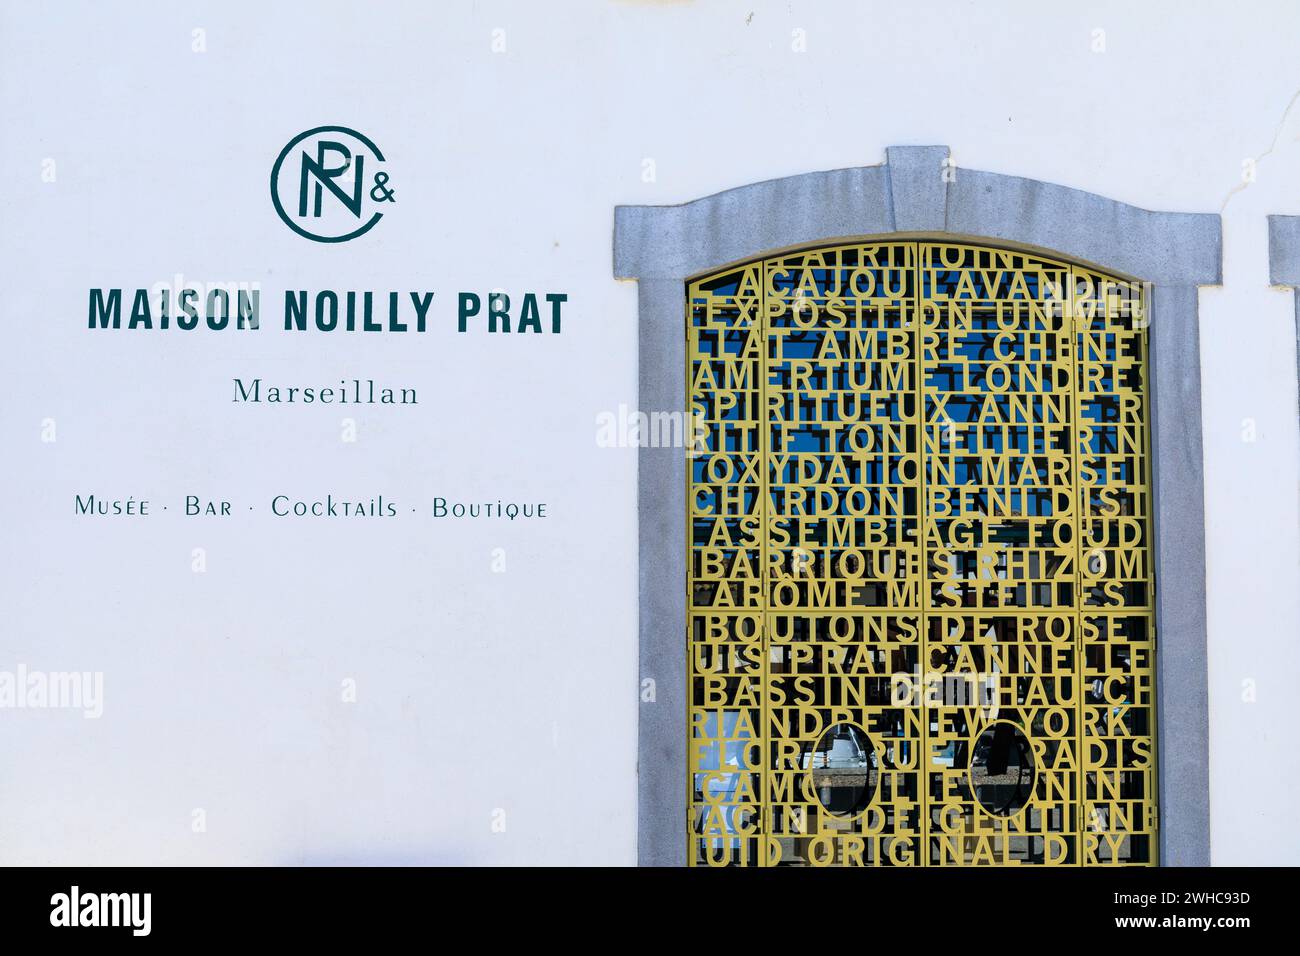 Maison Noilly Prat, Marseillan, France Stock Photo